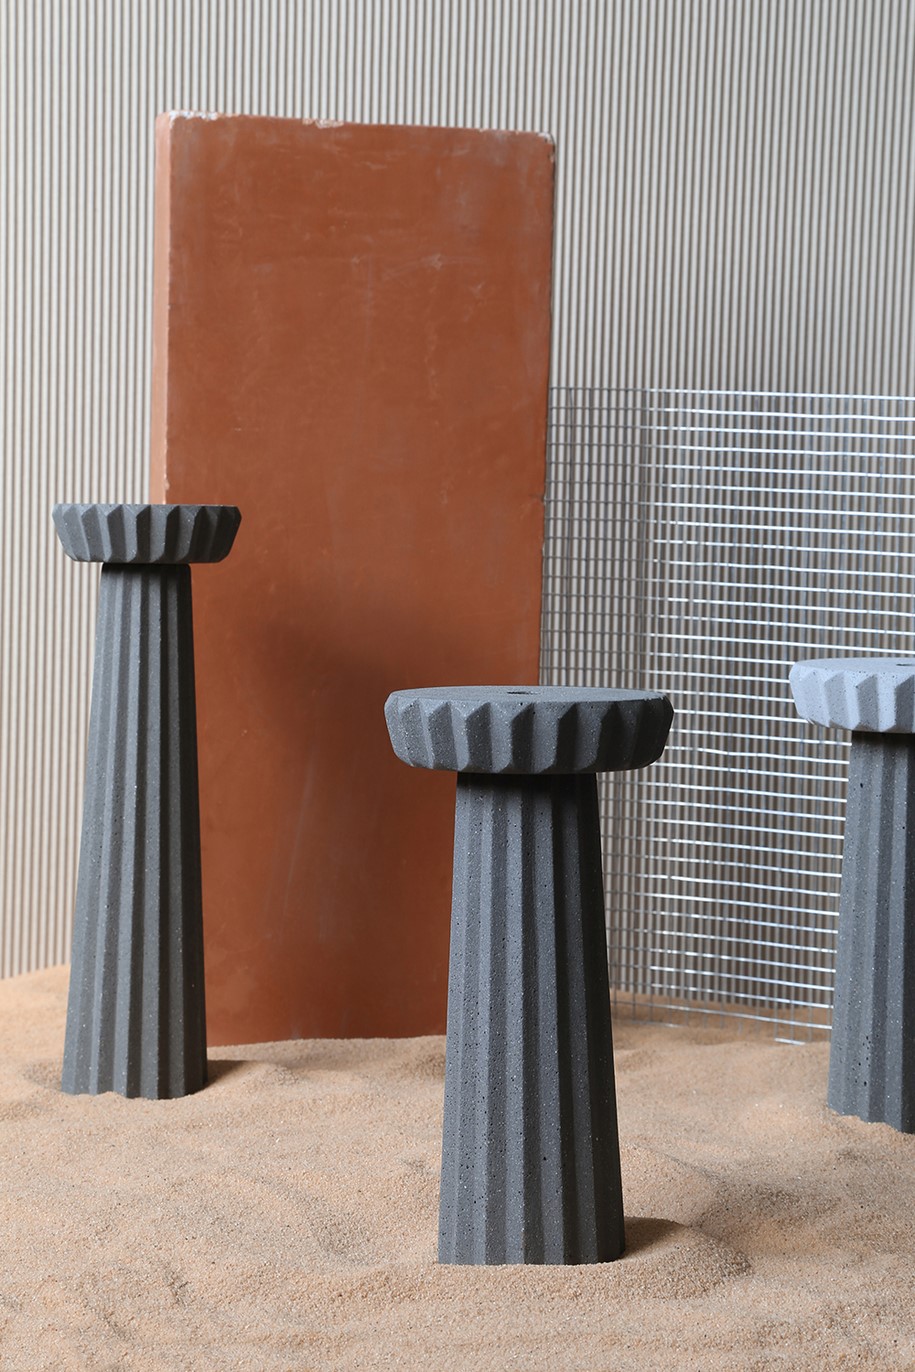 SIMAN collection, URBI ET ORBI, Gian Paolo Venier, Iranian architecture, concrete, concrete tableware